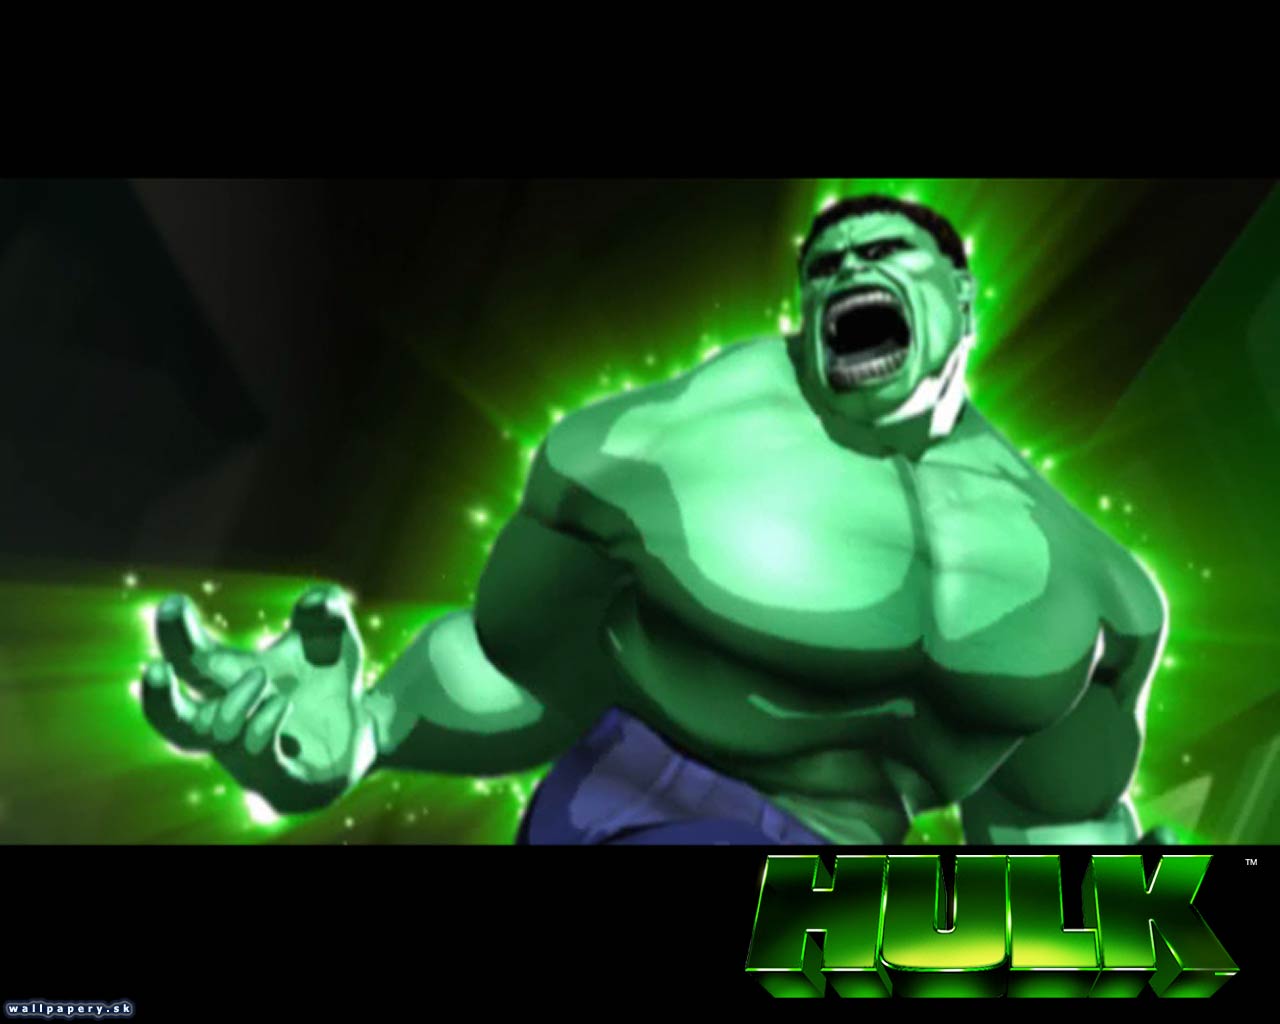 The Hulk - wallpaper 1